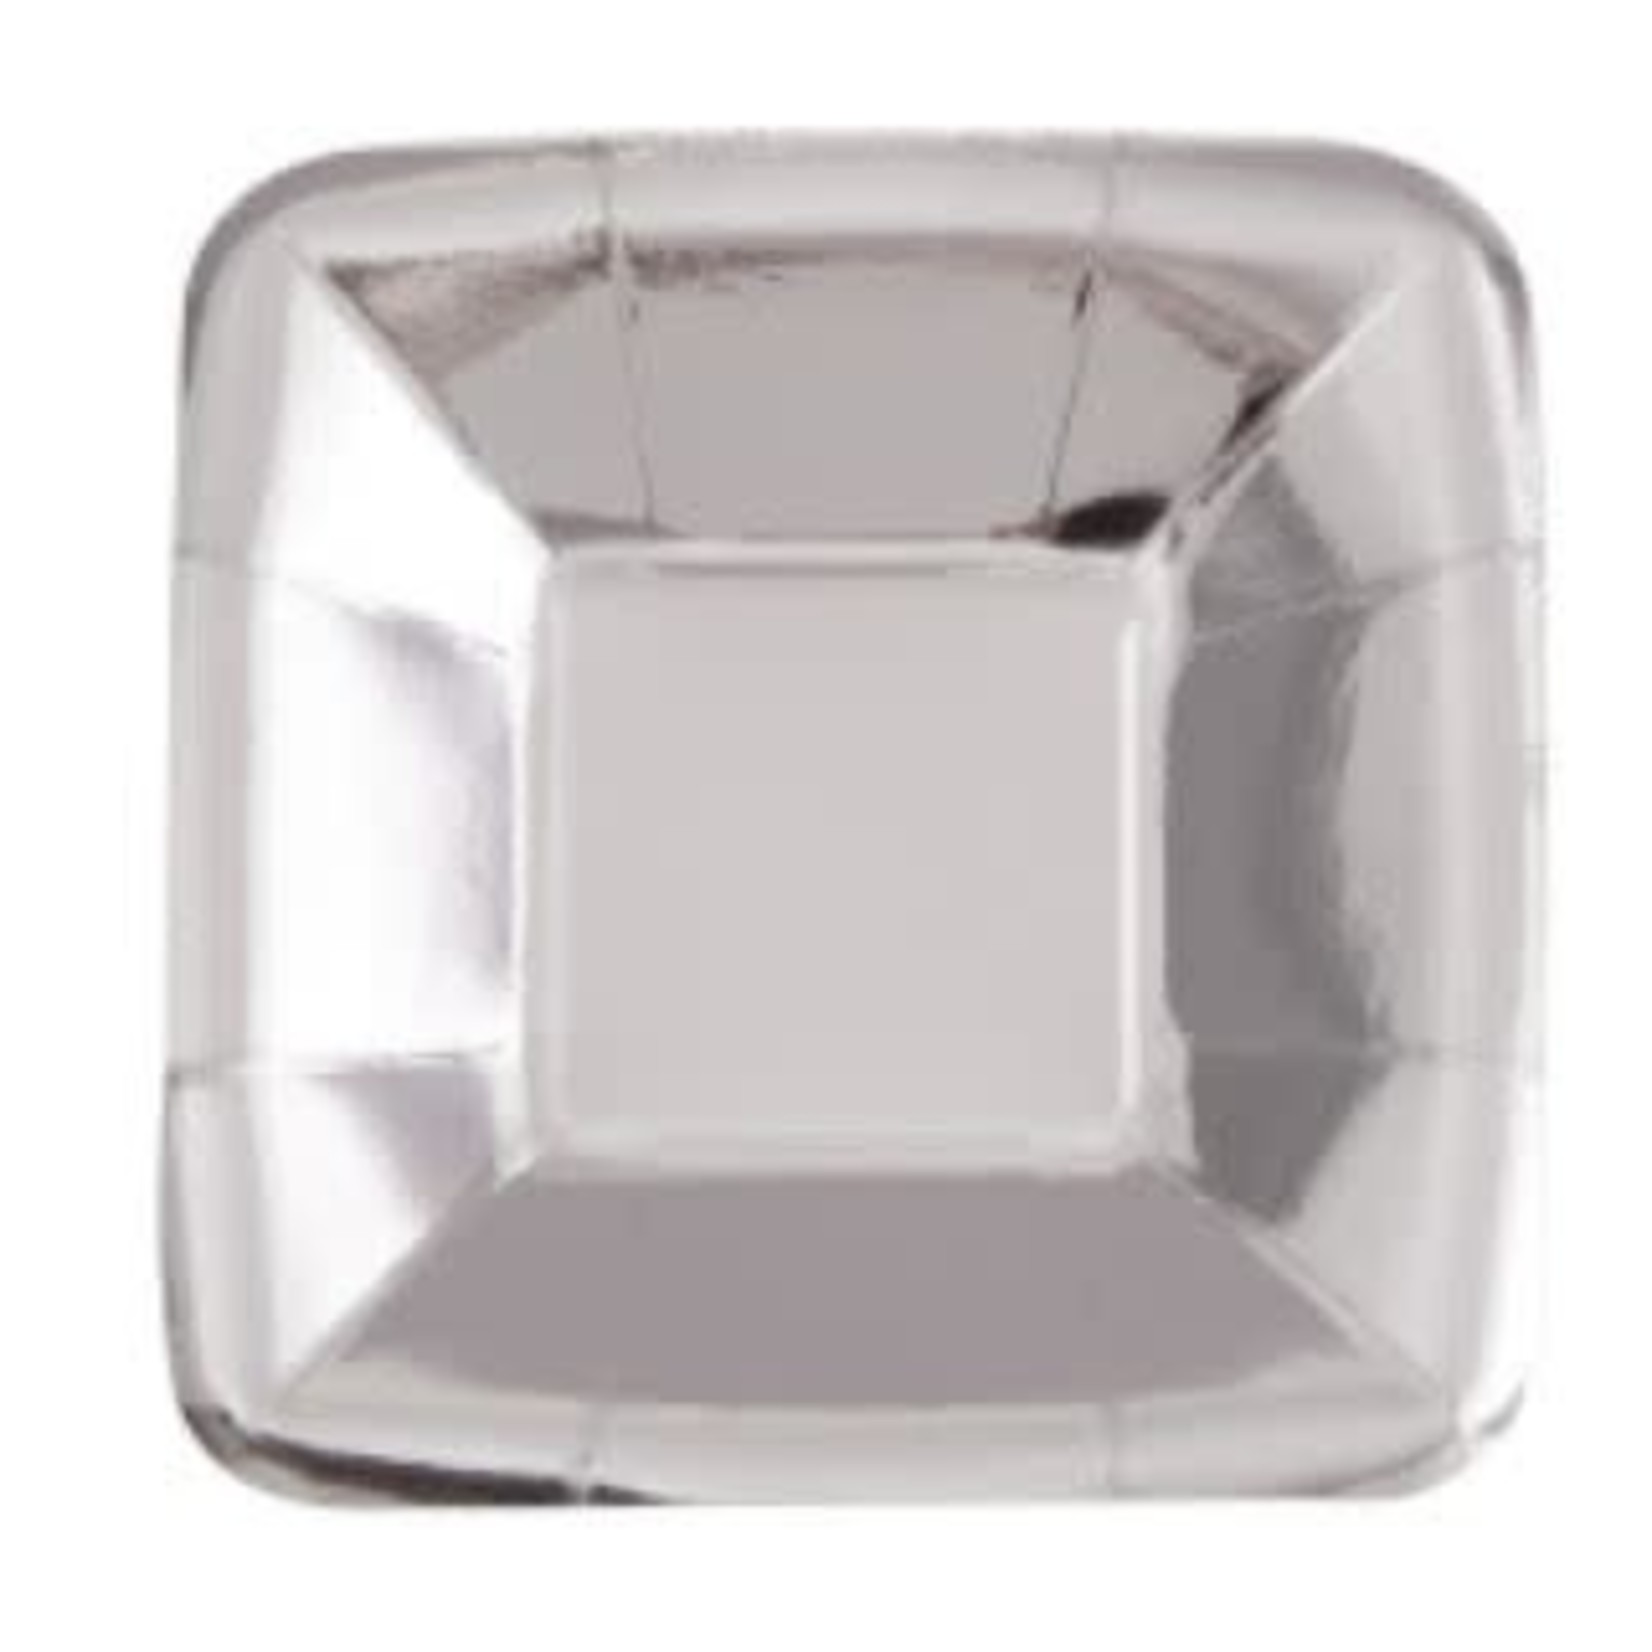 Silver Foil Square 5" Appetizer Plates  8ct - Foil Board